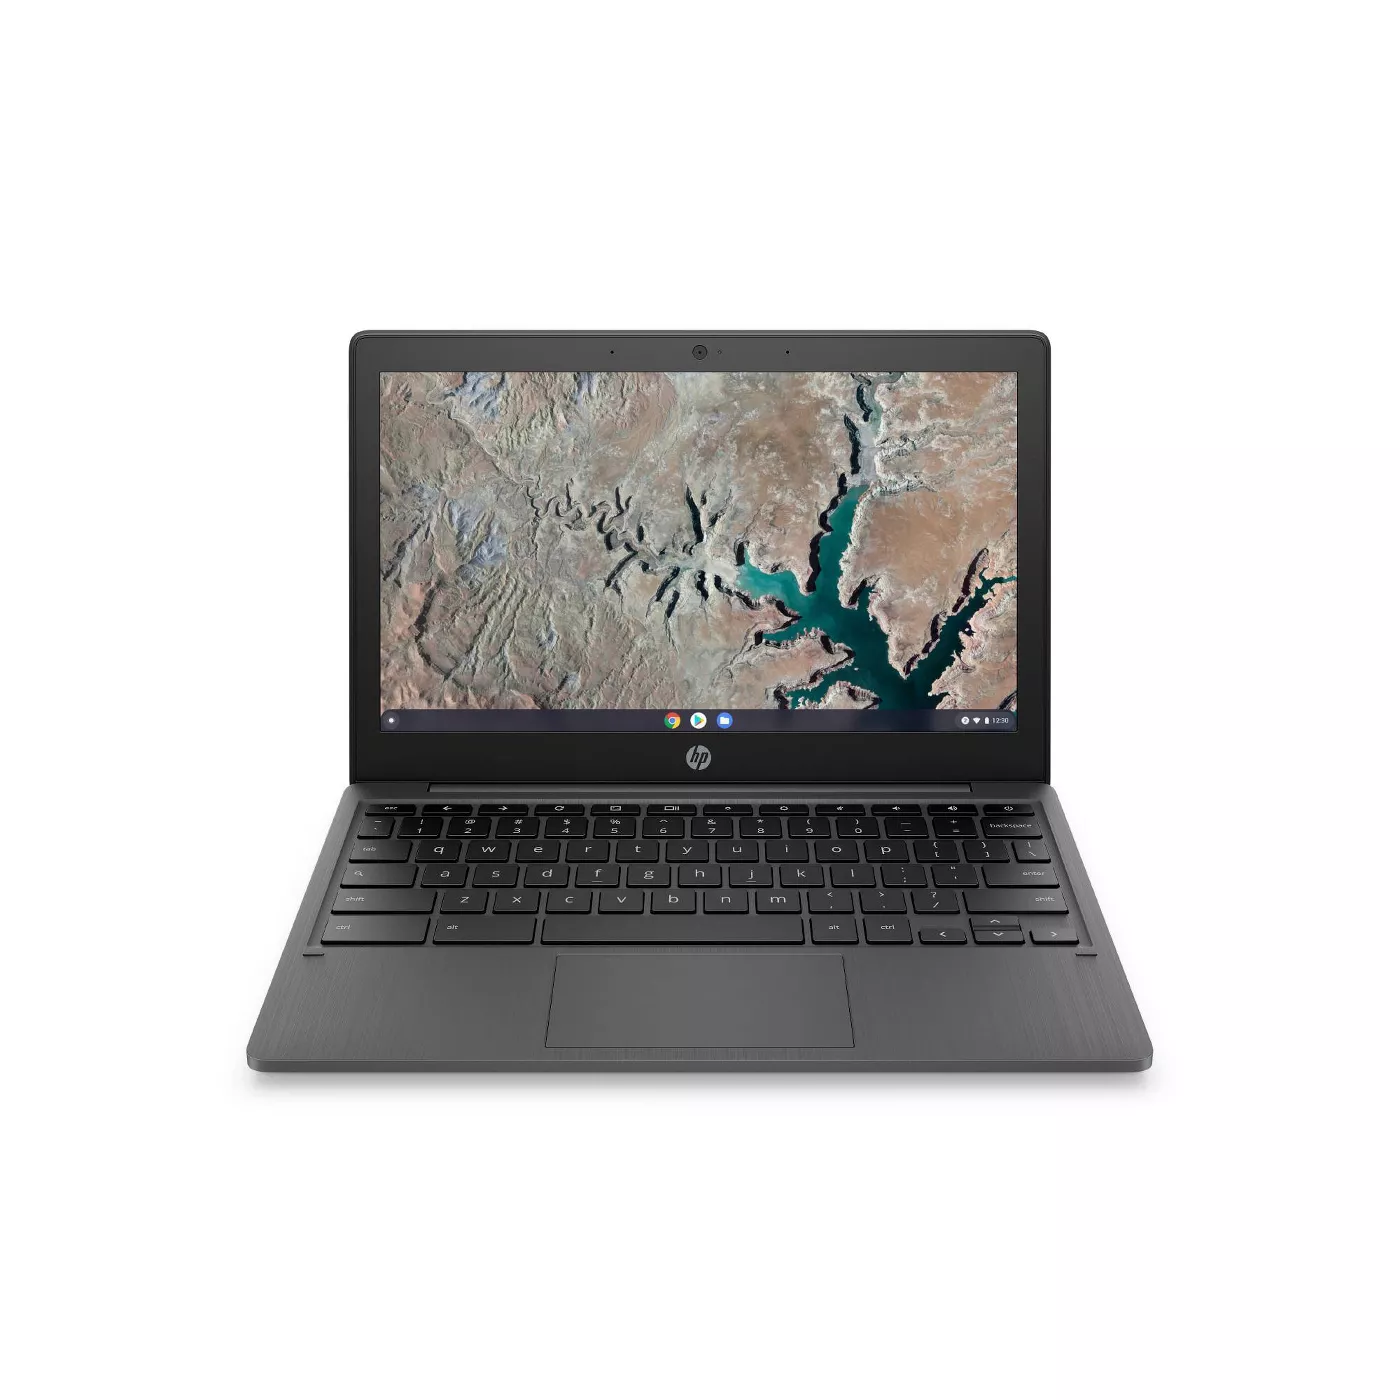 HP 11.6″ Chromebook Laptop with Chrome OS $129.99